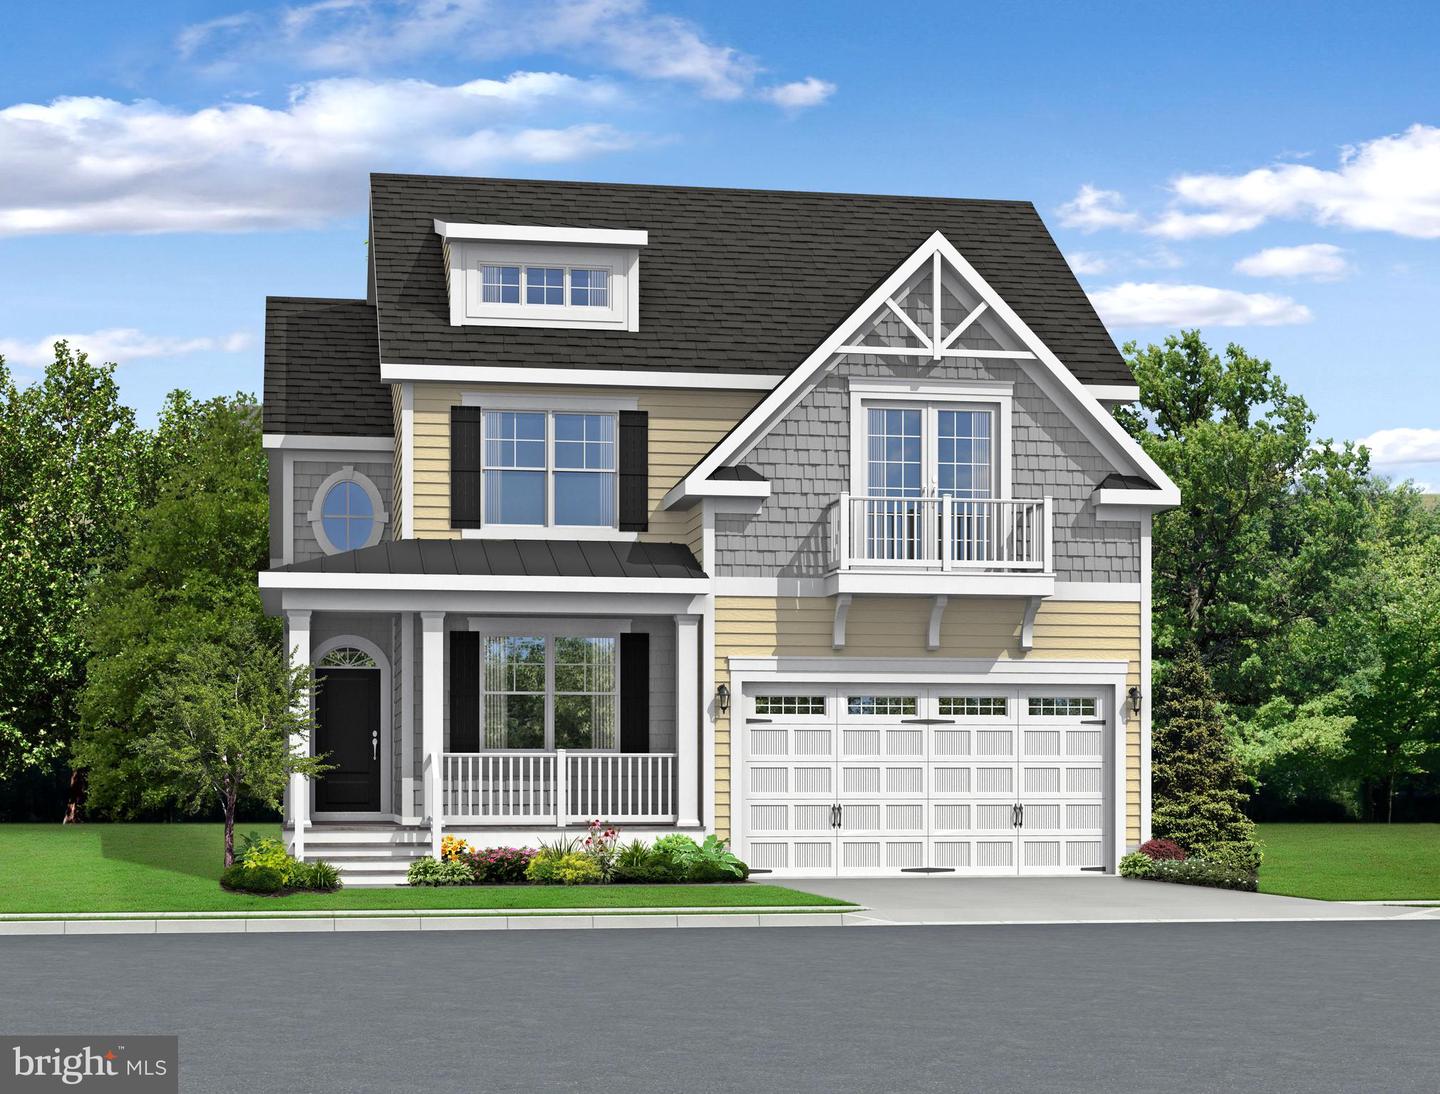 DESU2031440-801988062252-2022-11-02-11-01-29 Iris To-be-built Home Tbd | Millsboro, DE Real Estate For Sale | MLS# Desu2031440  - Jack Lingo REALTOR